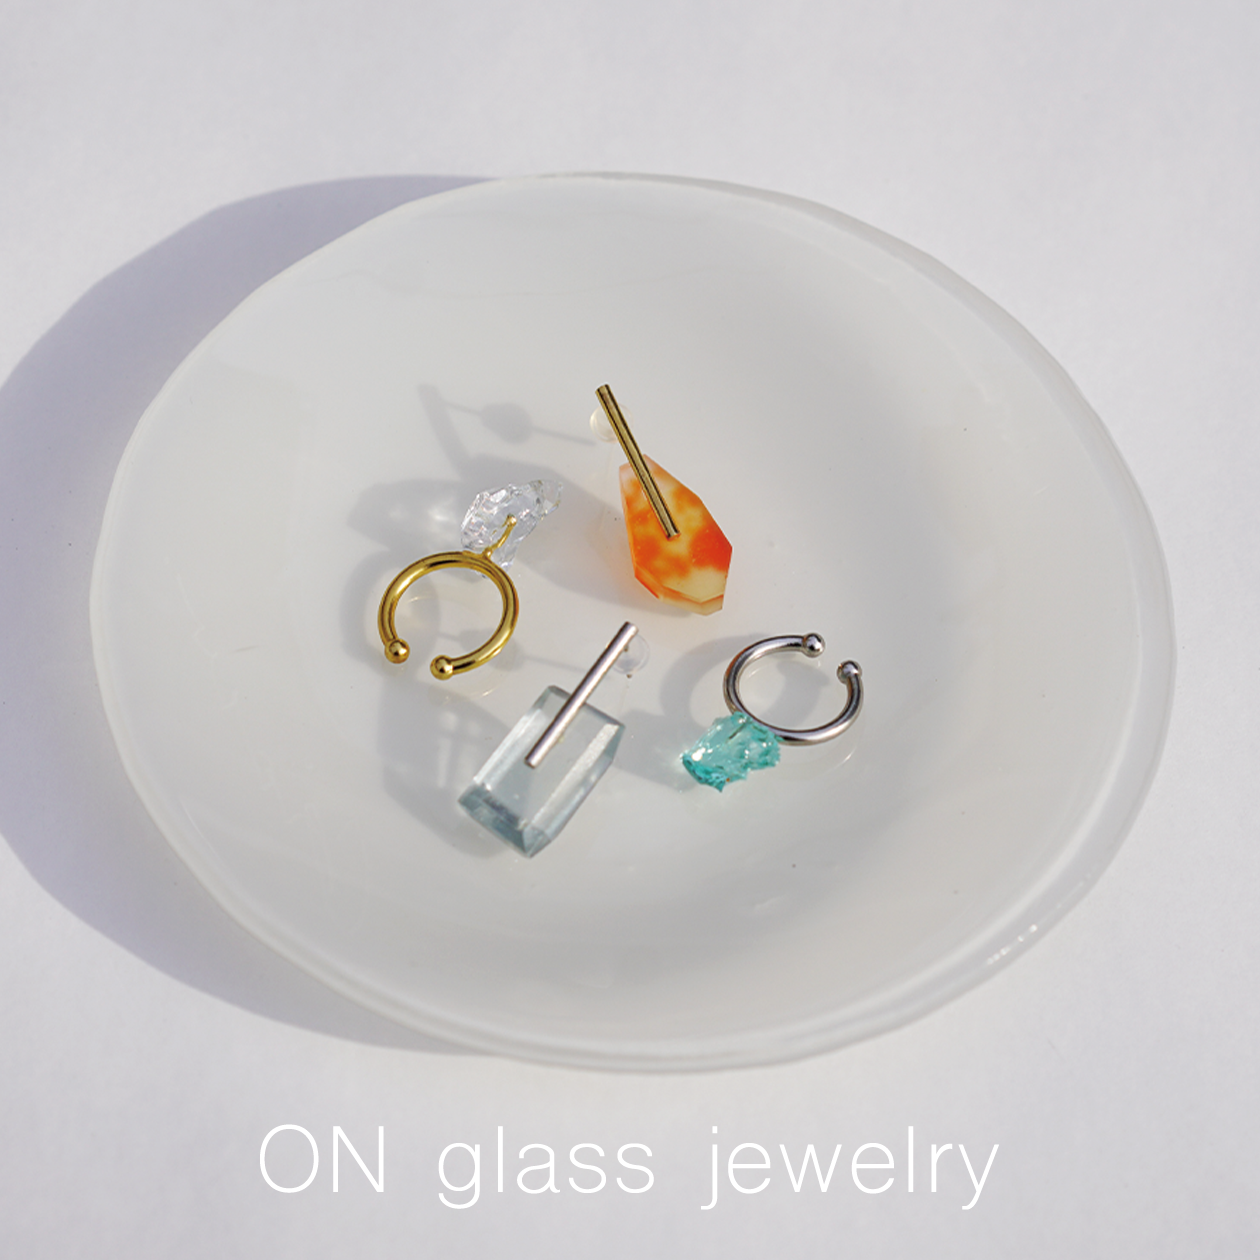 【NEW BRAND IN】ON glass jewelryの取り扱いがスタートしました。